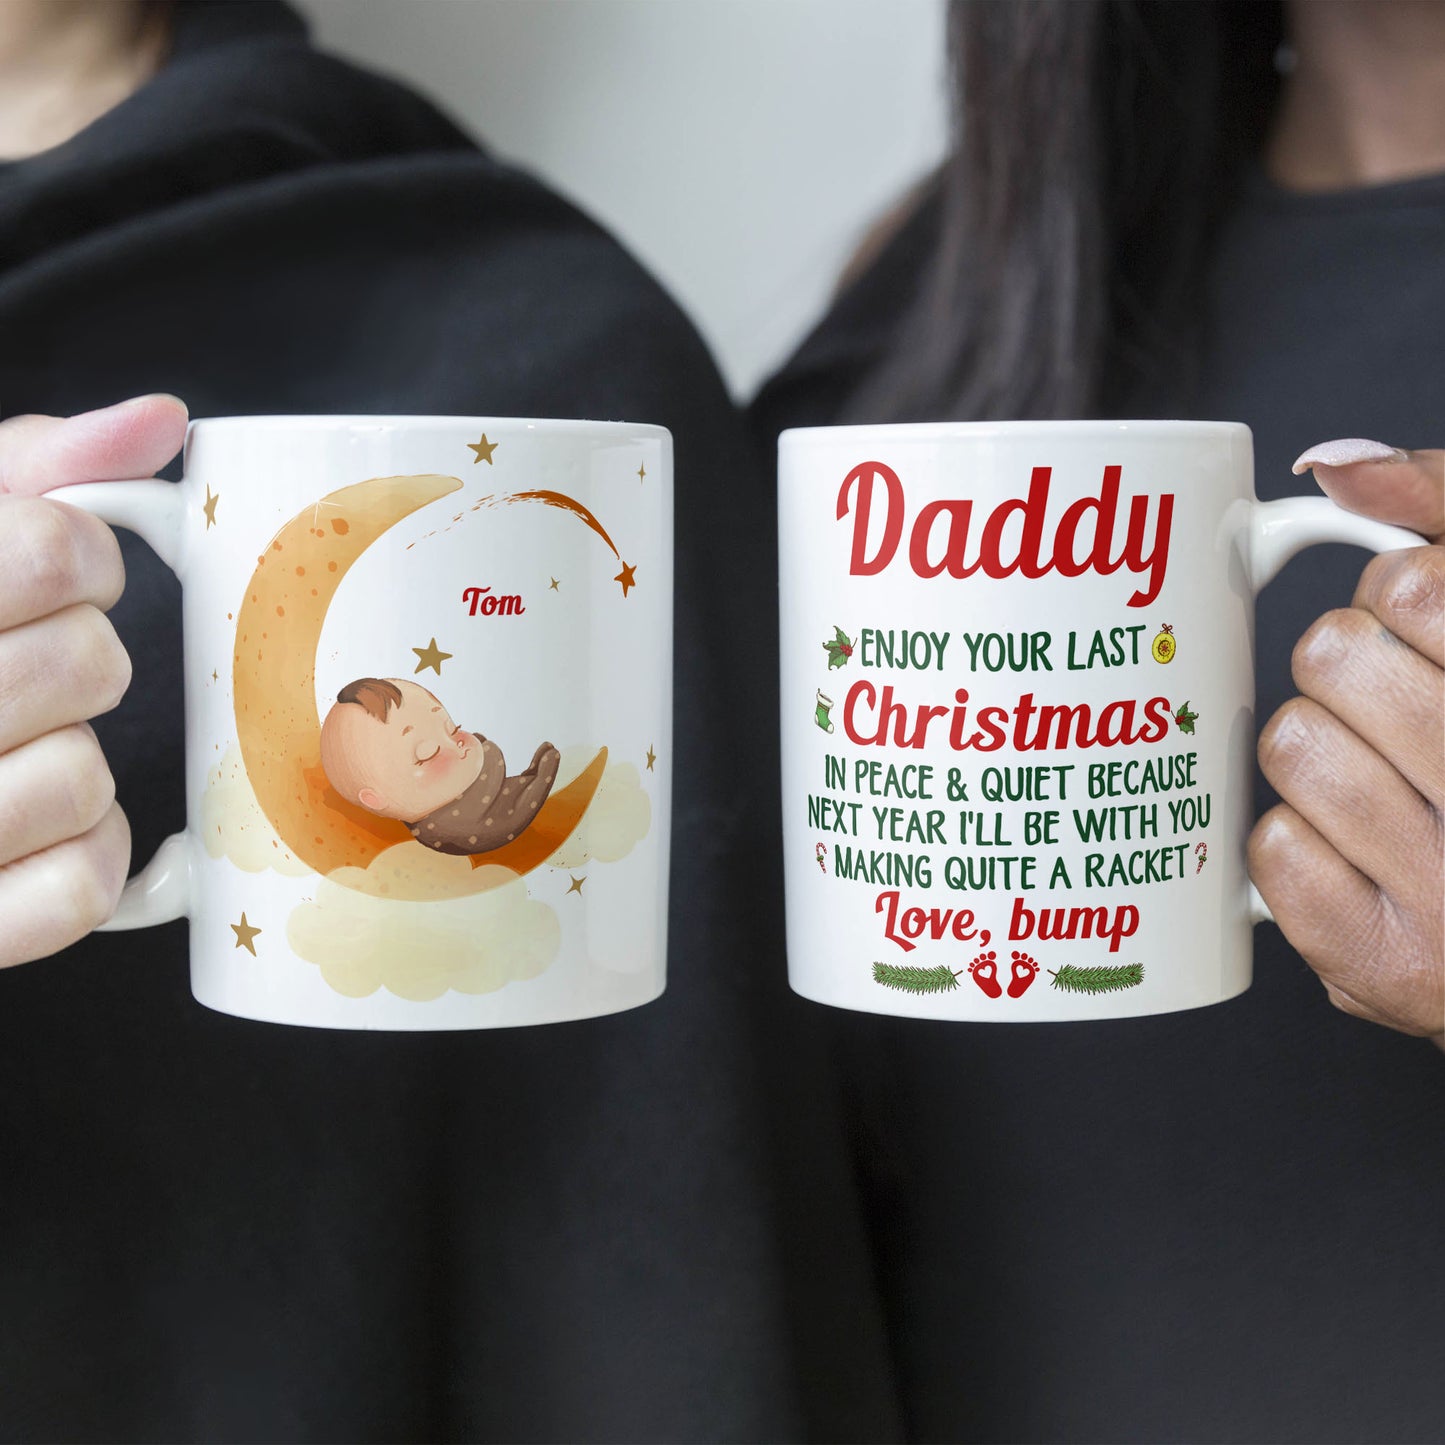 Enjoy Your Last Christmas - Personalized Mug - Birthday & Christmas Gift For Family Members